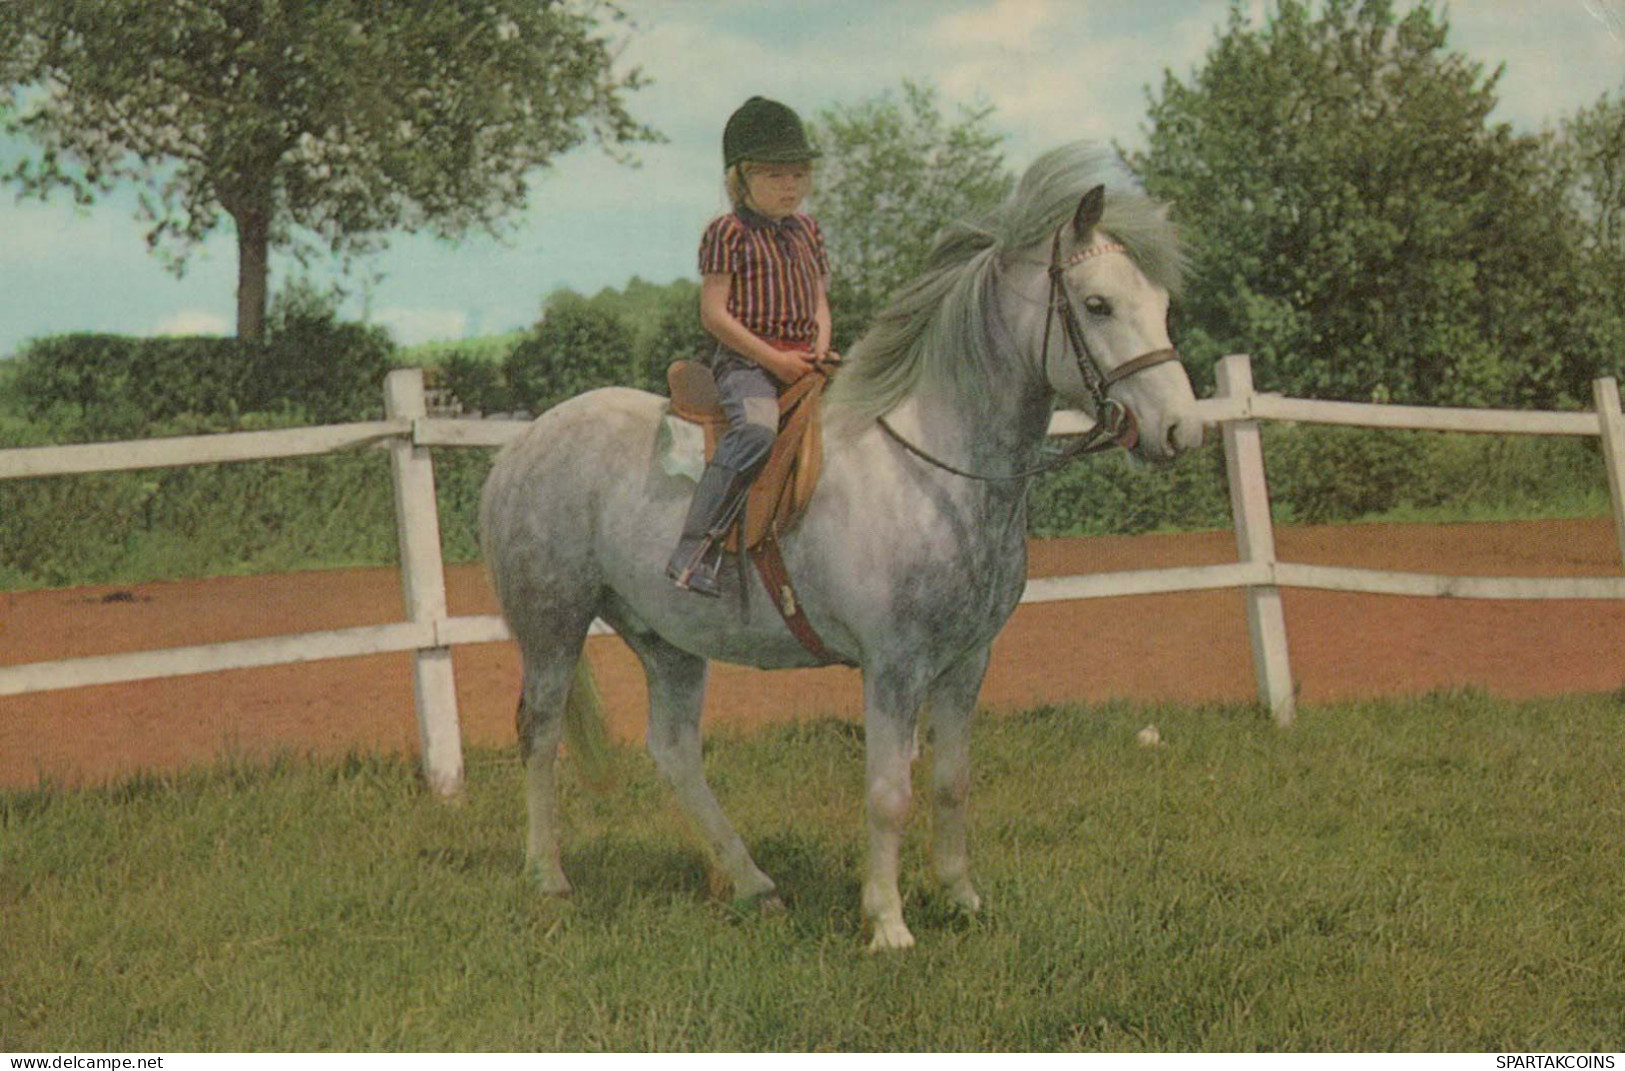 PFERD Tier Vintage Ansichtskarte Postkarte CPA #PKE880.A - Horses